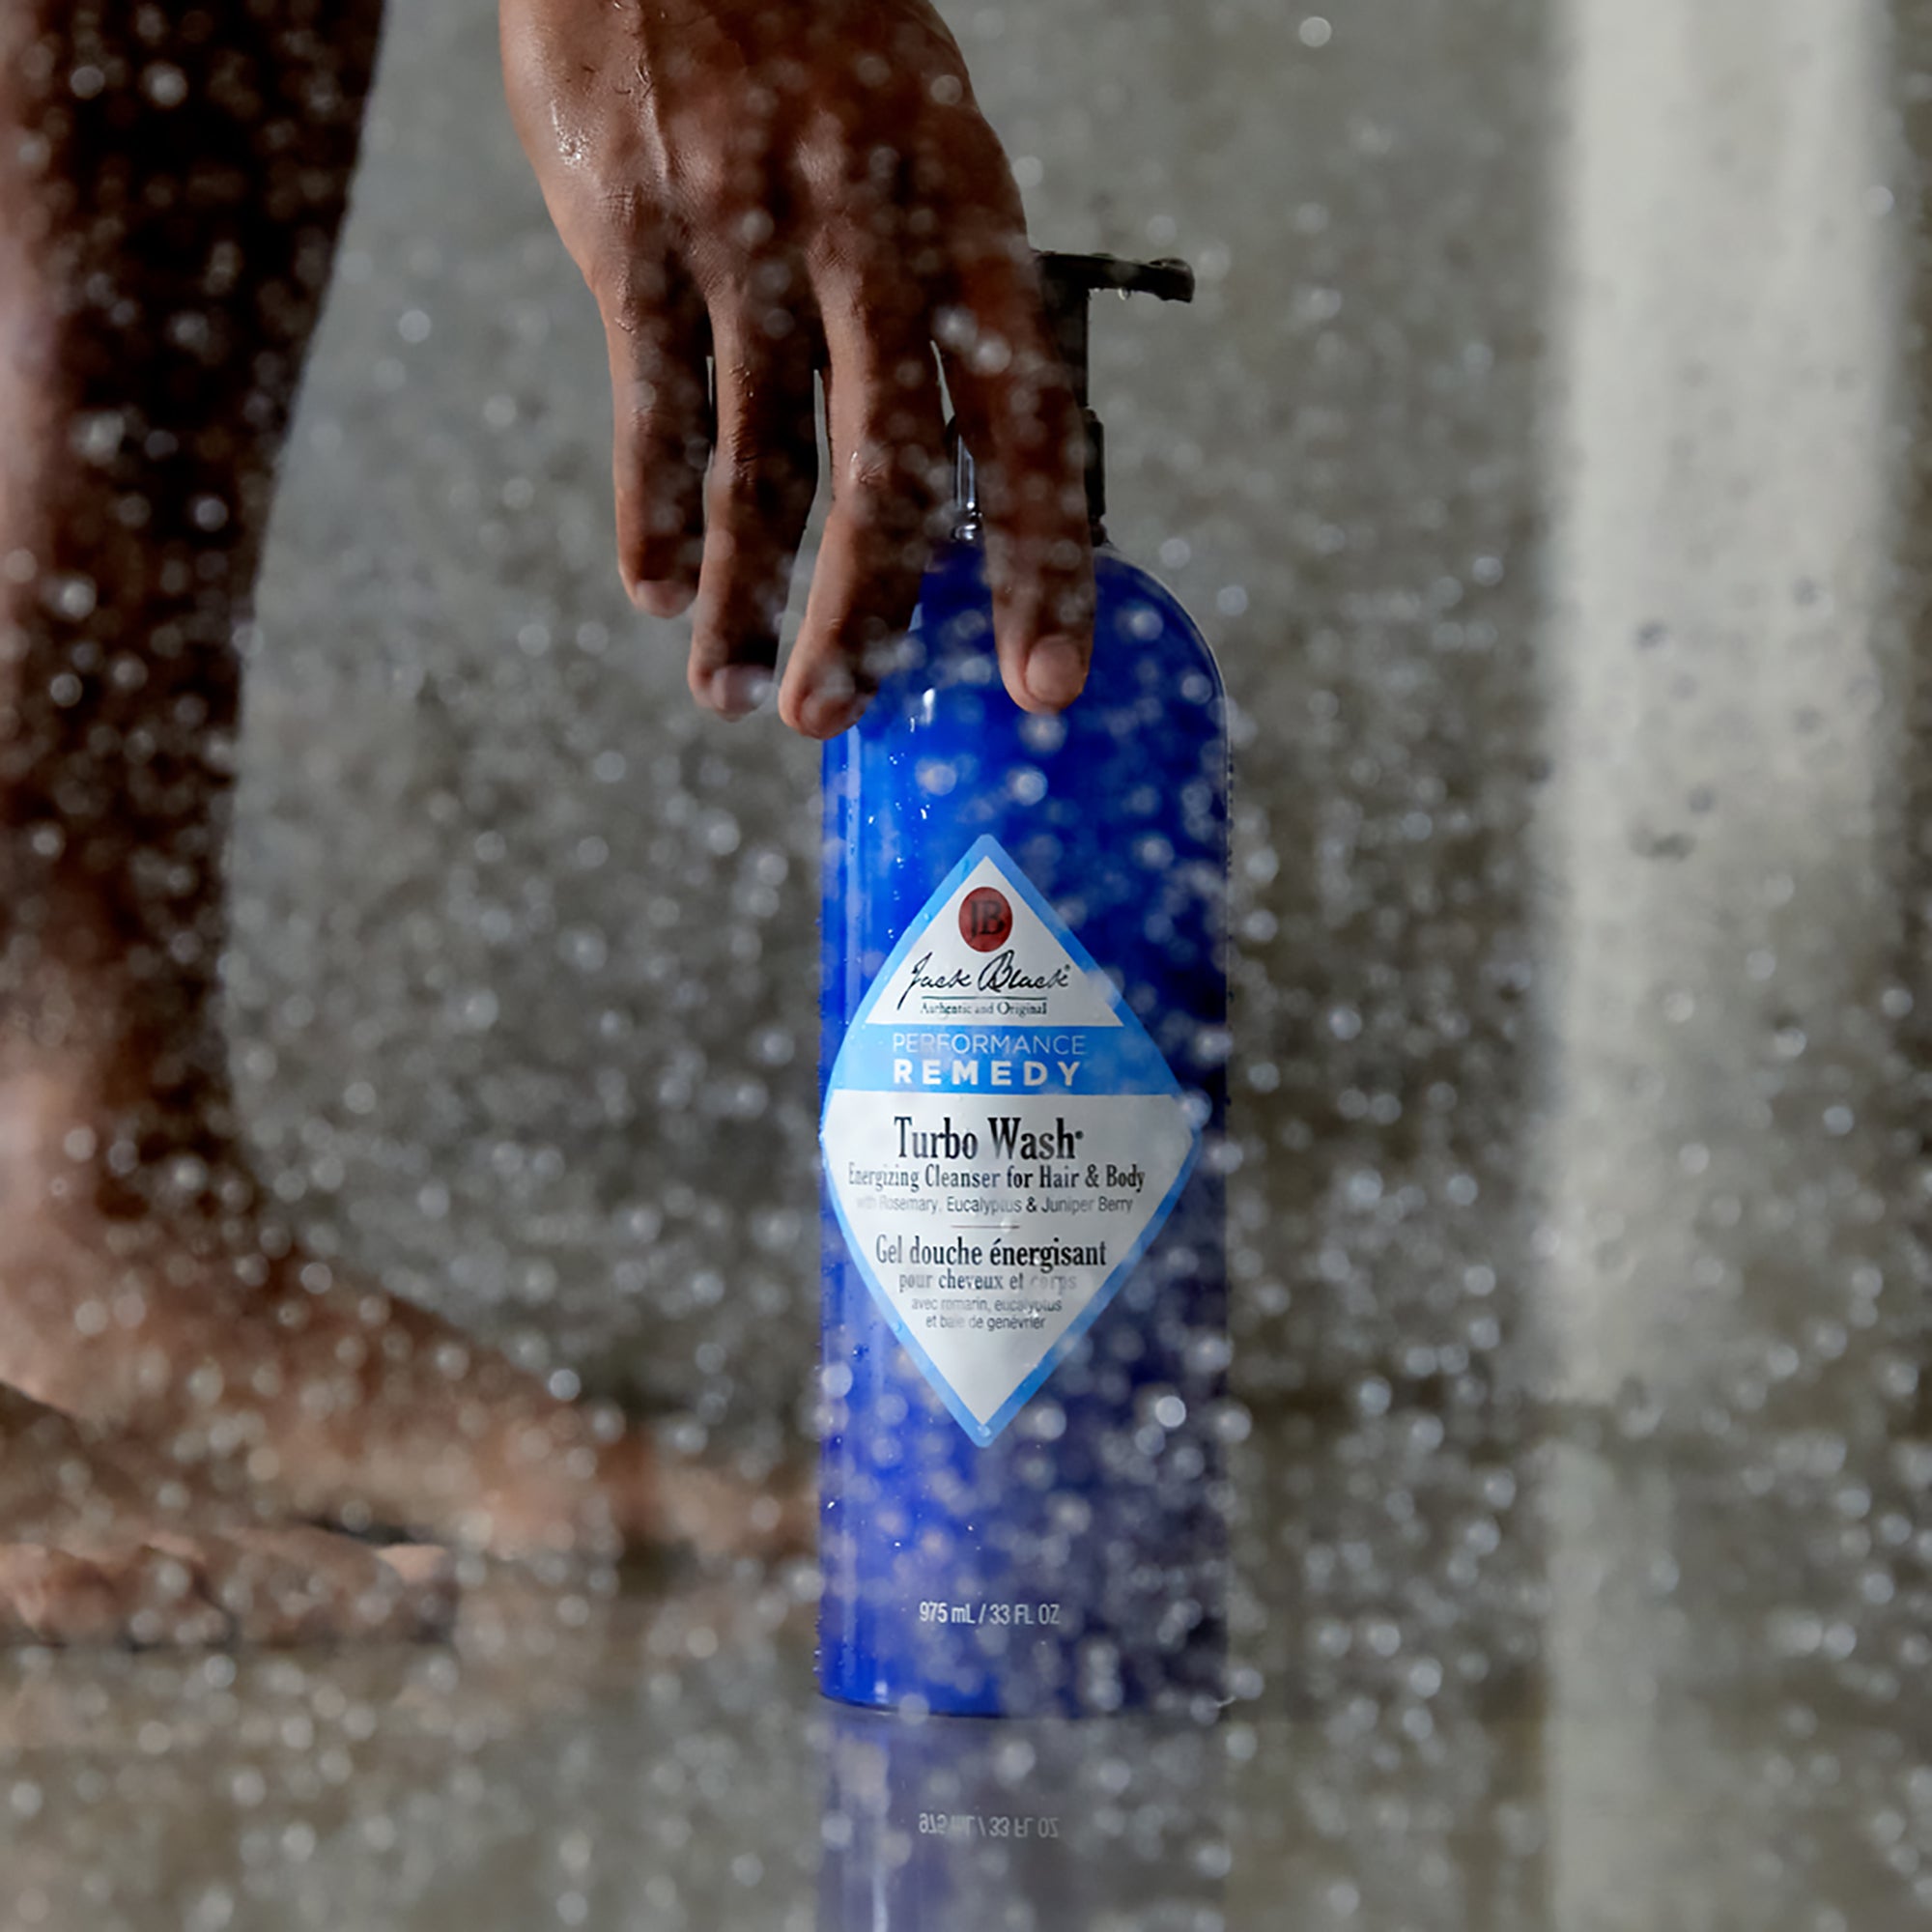 Jack Black Turbo Wash Energizing Cleanser for Hair & Body / 33OZ